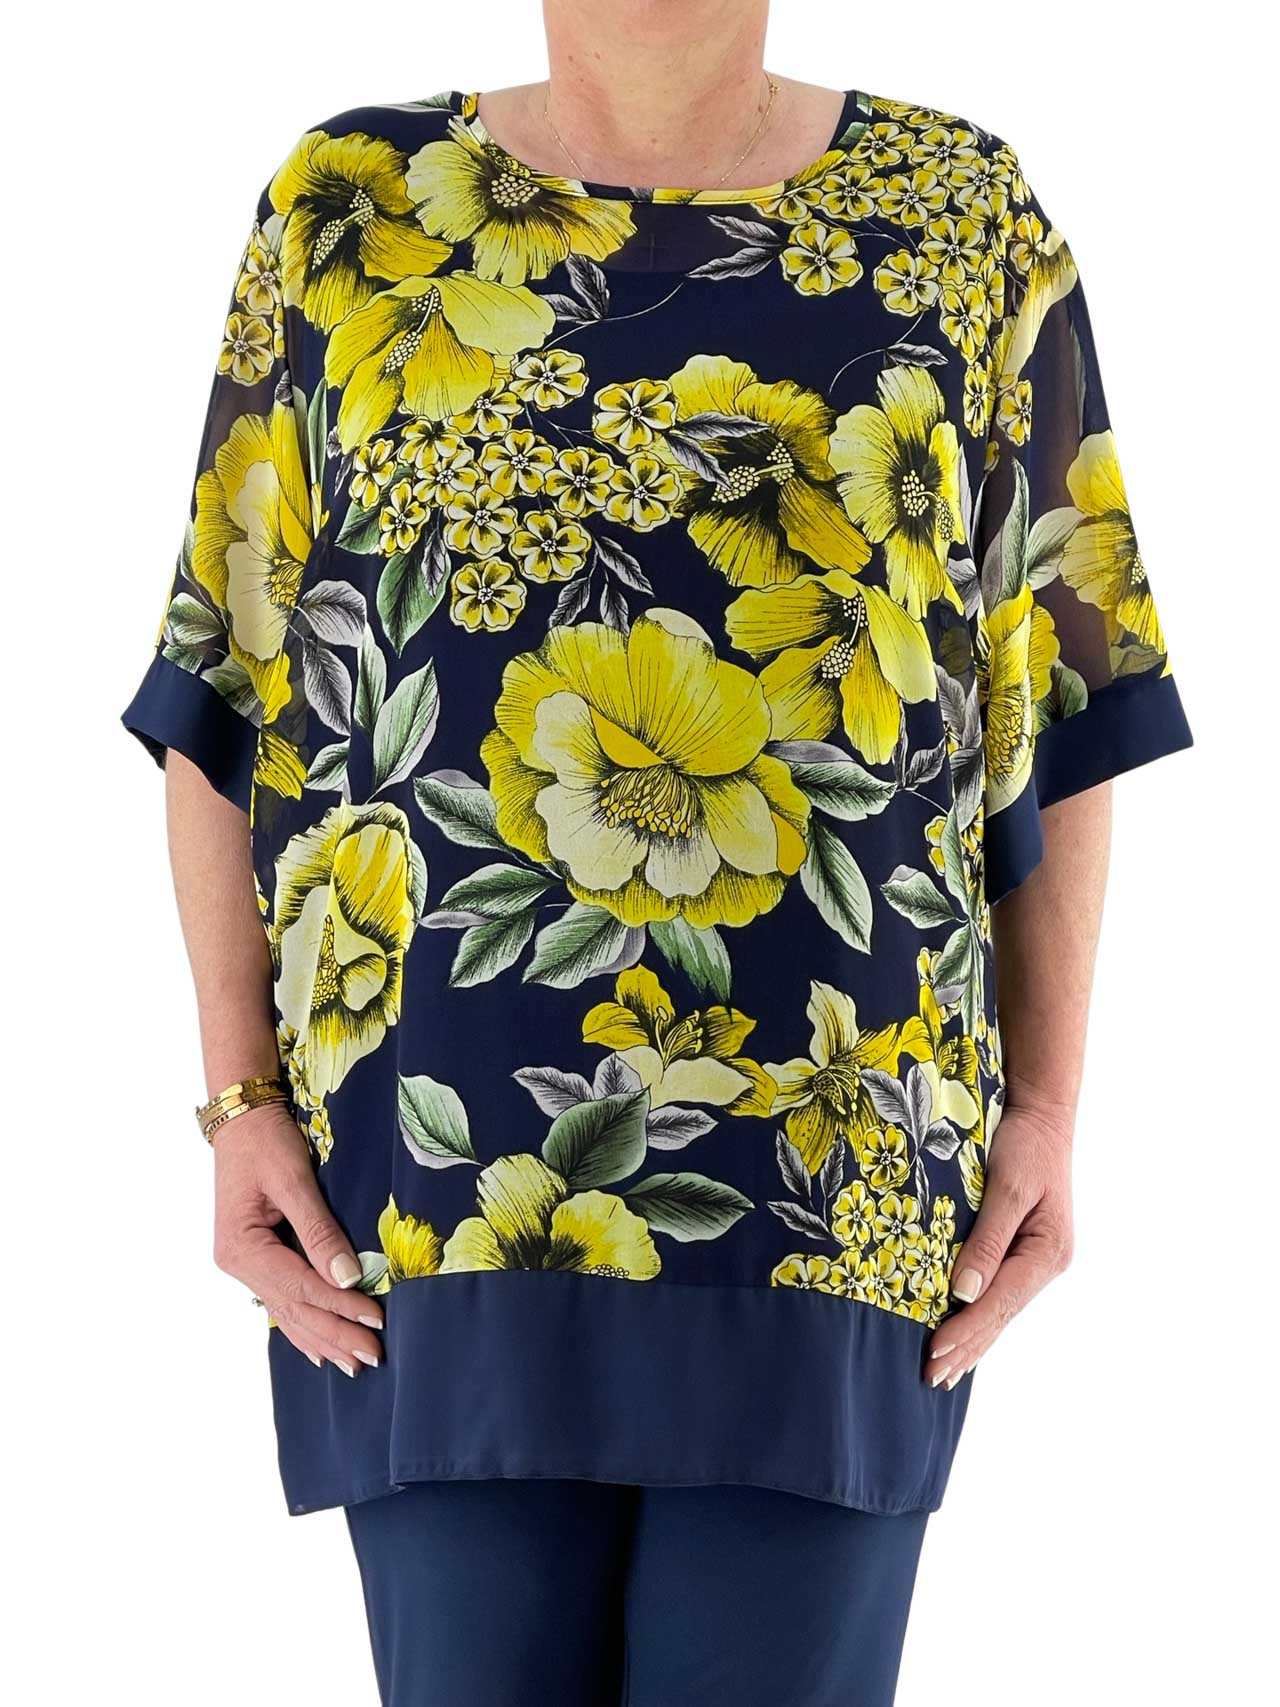 Women's blouse floral code 9040